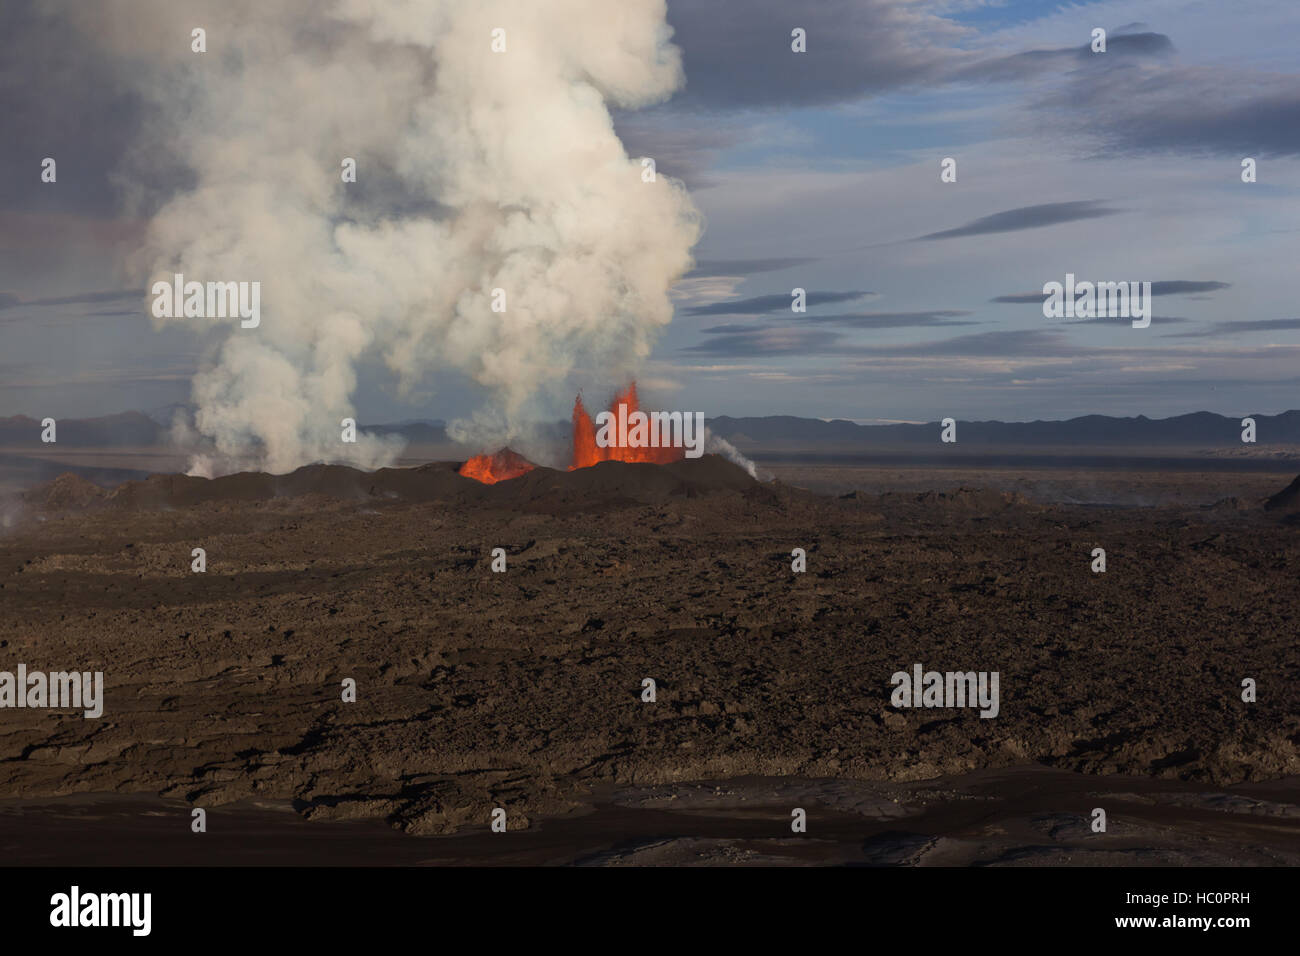 Holuhraun Iceland Volcano in Iceland september 2014 Stock Photo